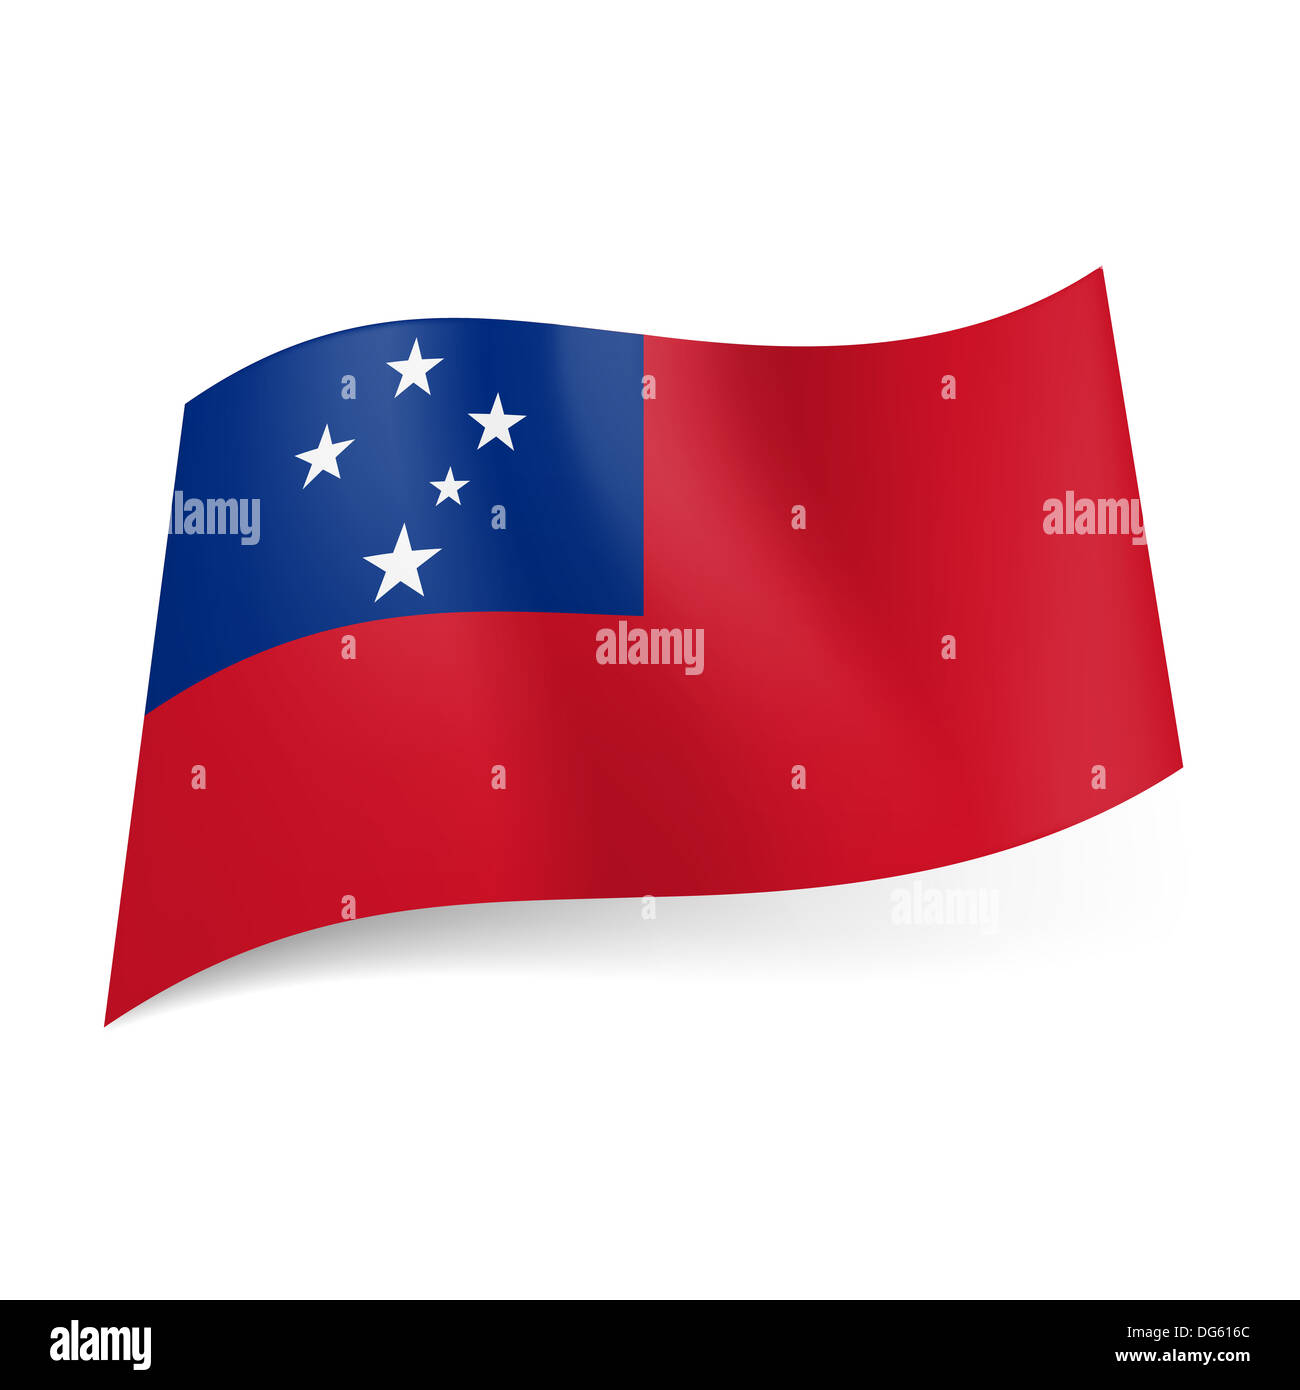 Vend tilbage dok Overskæg National flag of Samoa: red background and blue square in upper left corner  with five white stars Stock Photo - Alamy